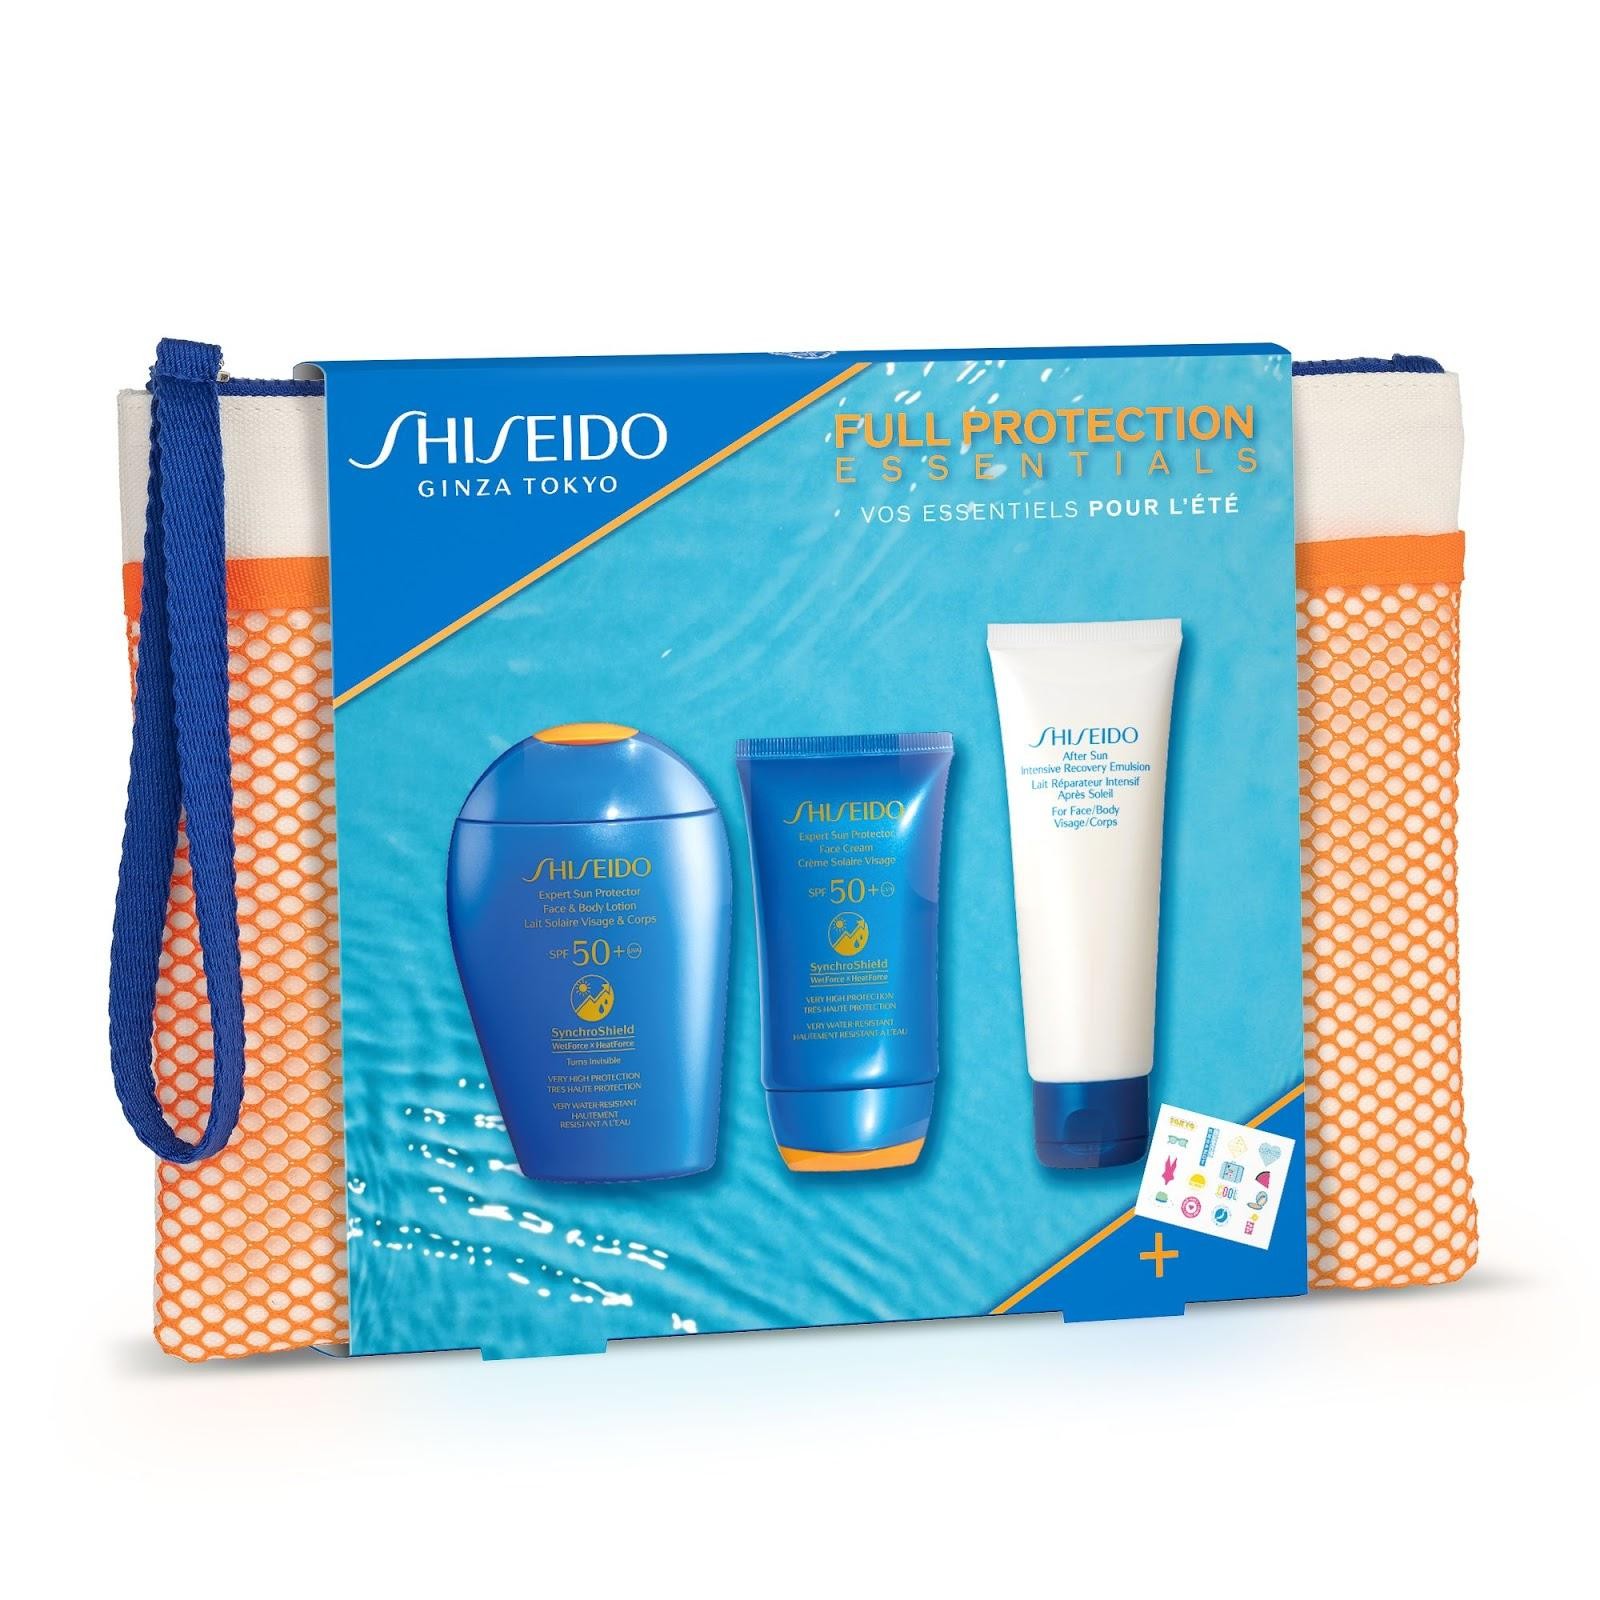 Shiseido Full Protection Essentials 150ml + 50ml + 75ml